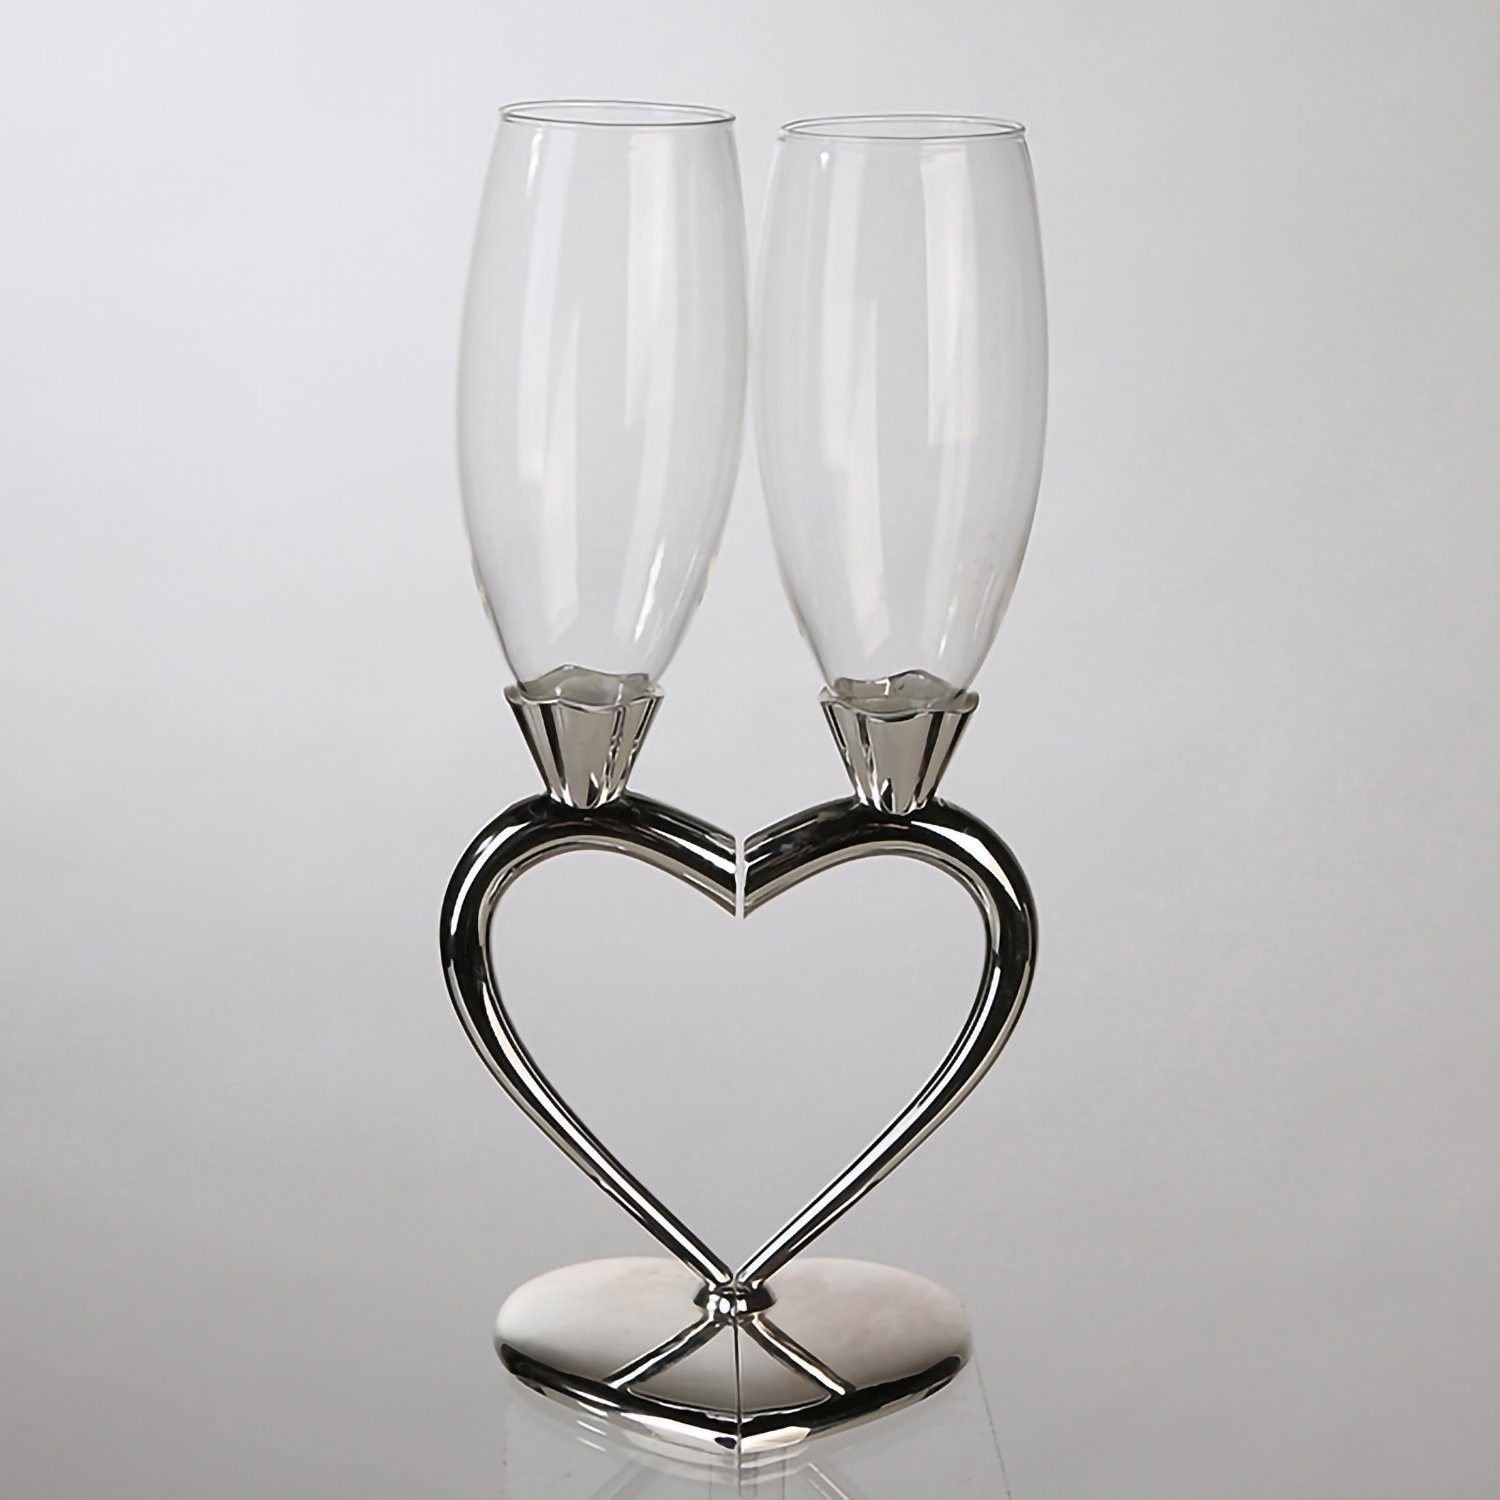 GILDE B. H. Champagnerglas Glas 26cm 5cm Love klar-silber x - - GILDE